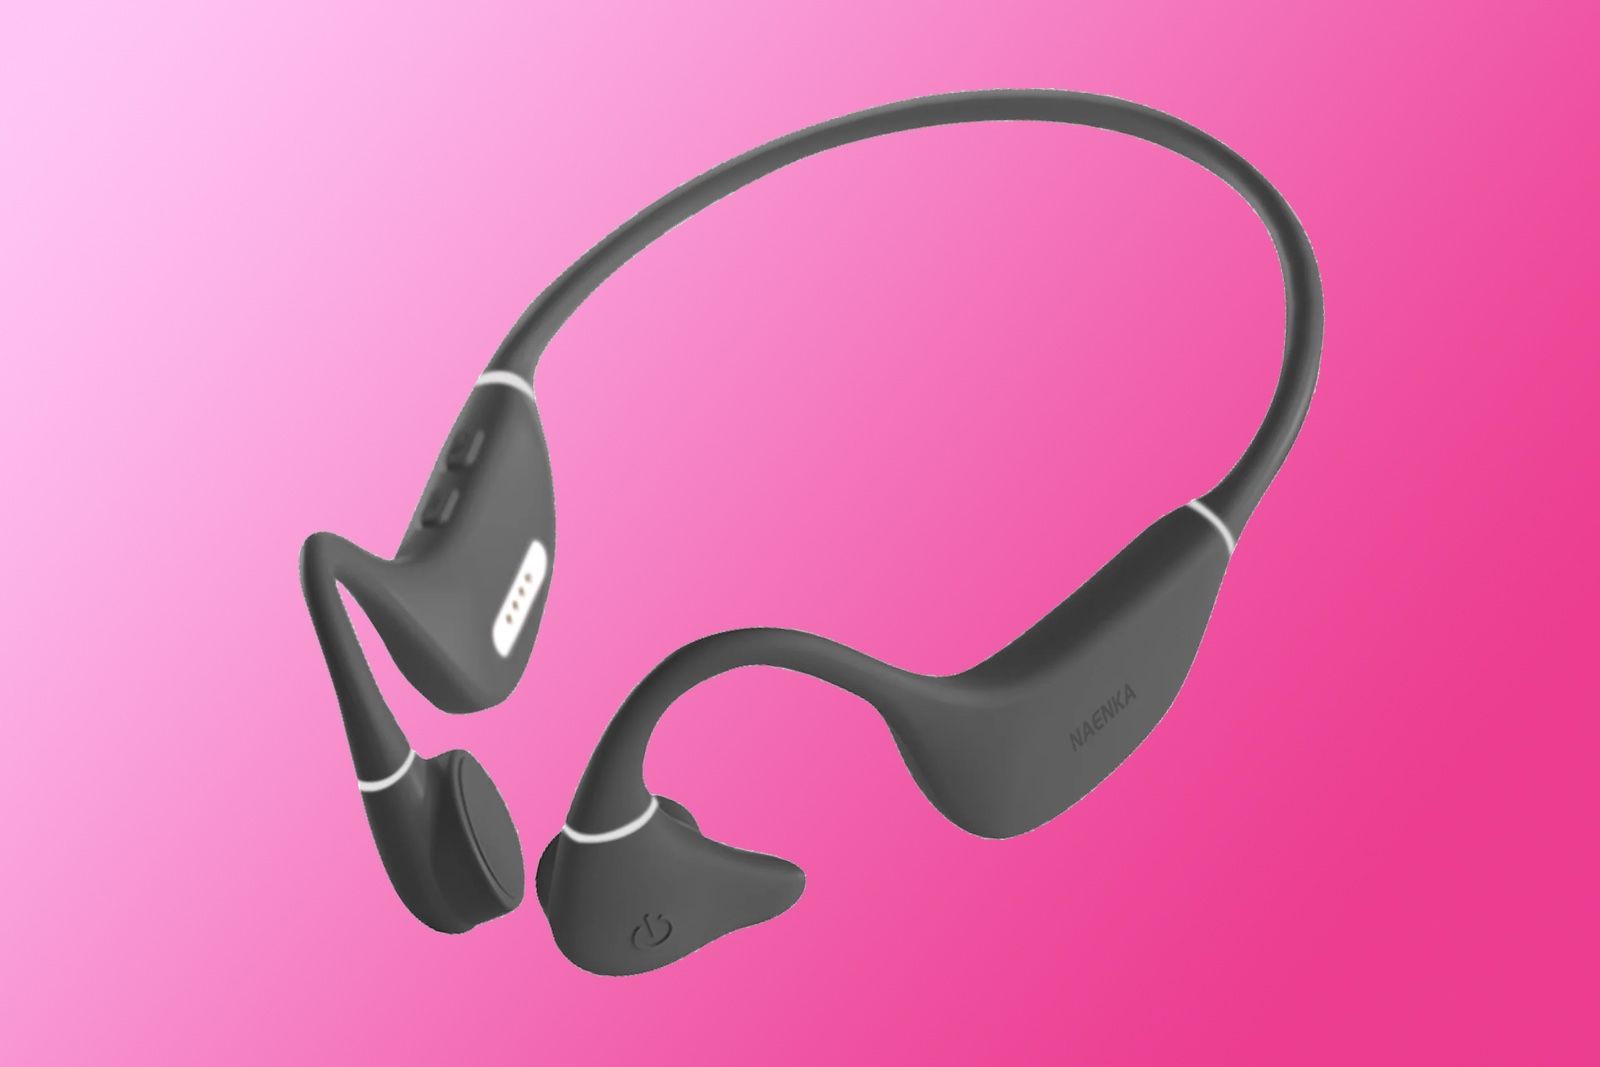 Naenka Runner Diver bone conduction headphones review: